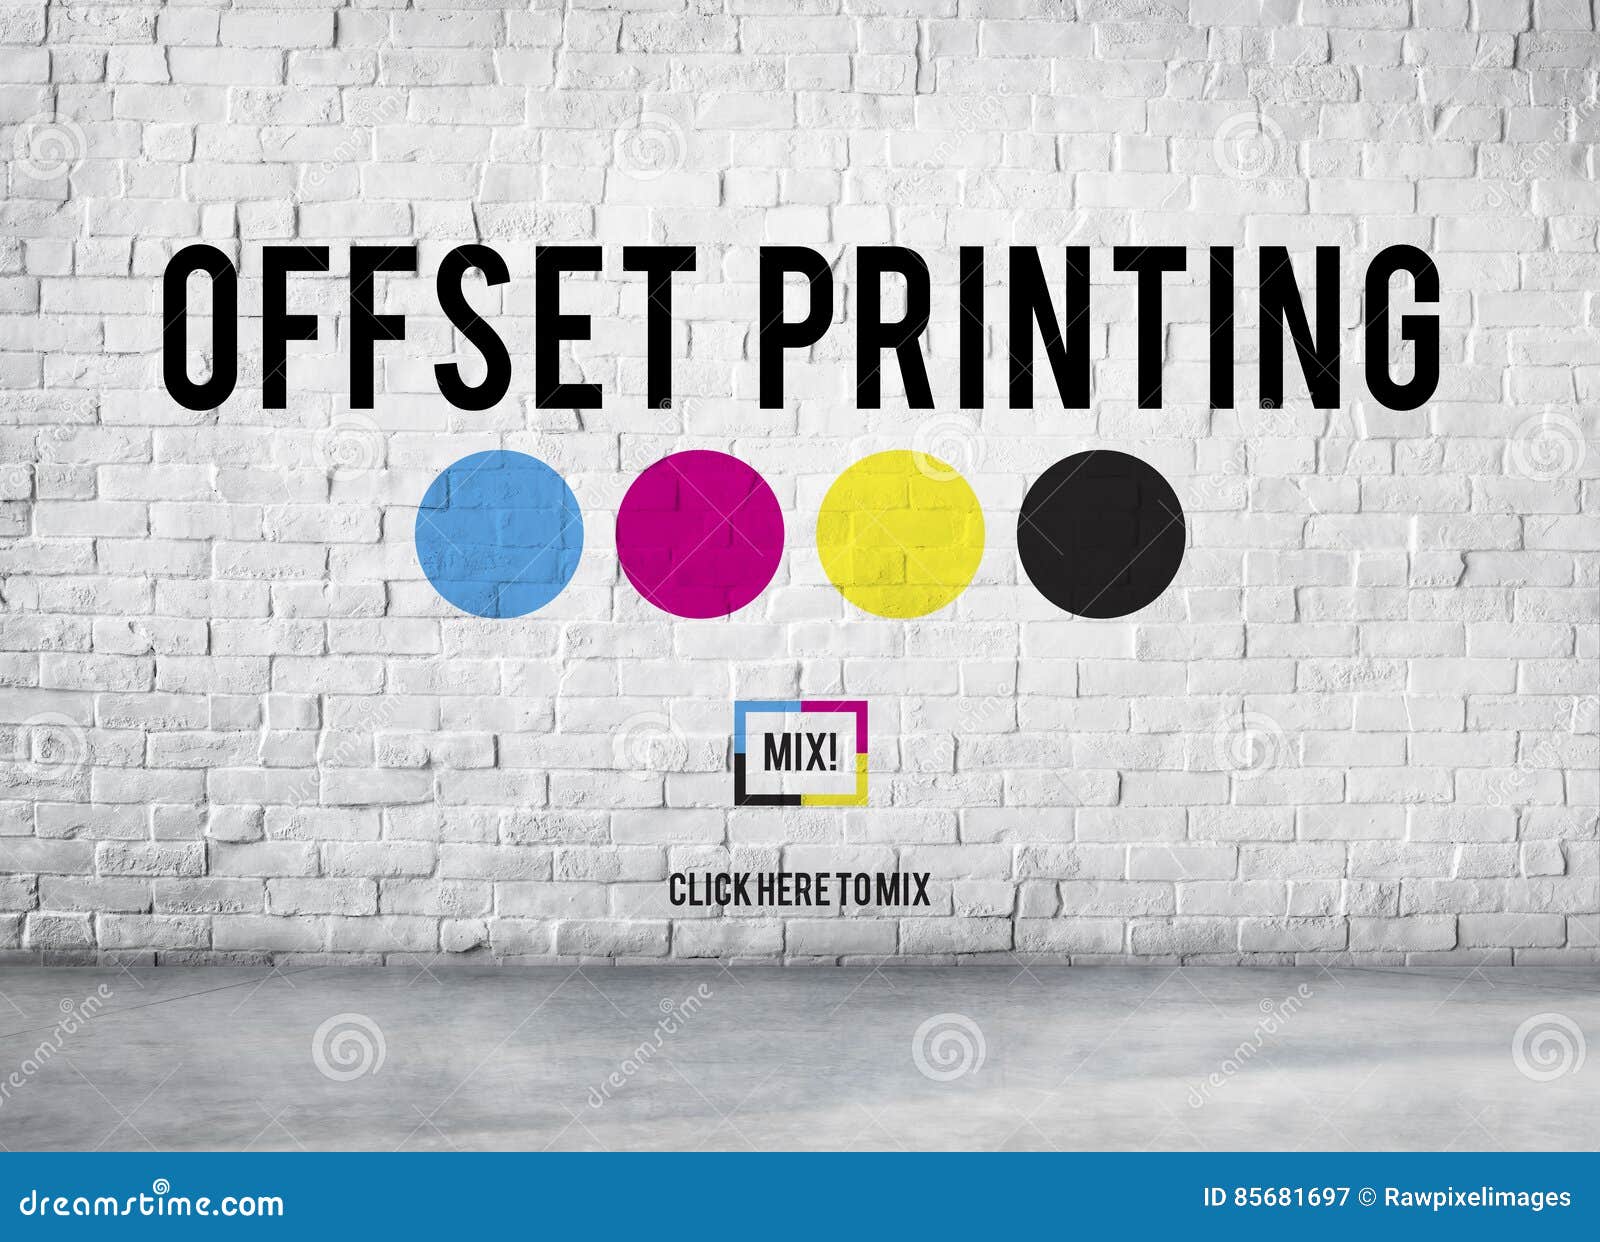 offset printing process cmyk cyan magenta yellow key concept